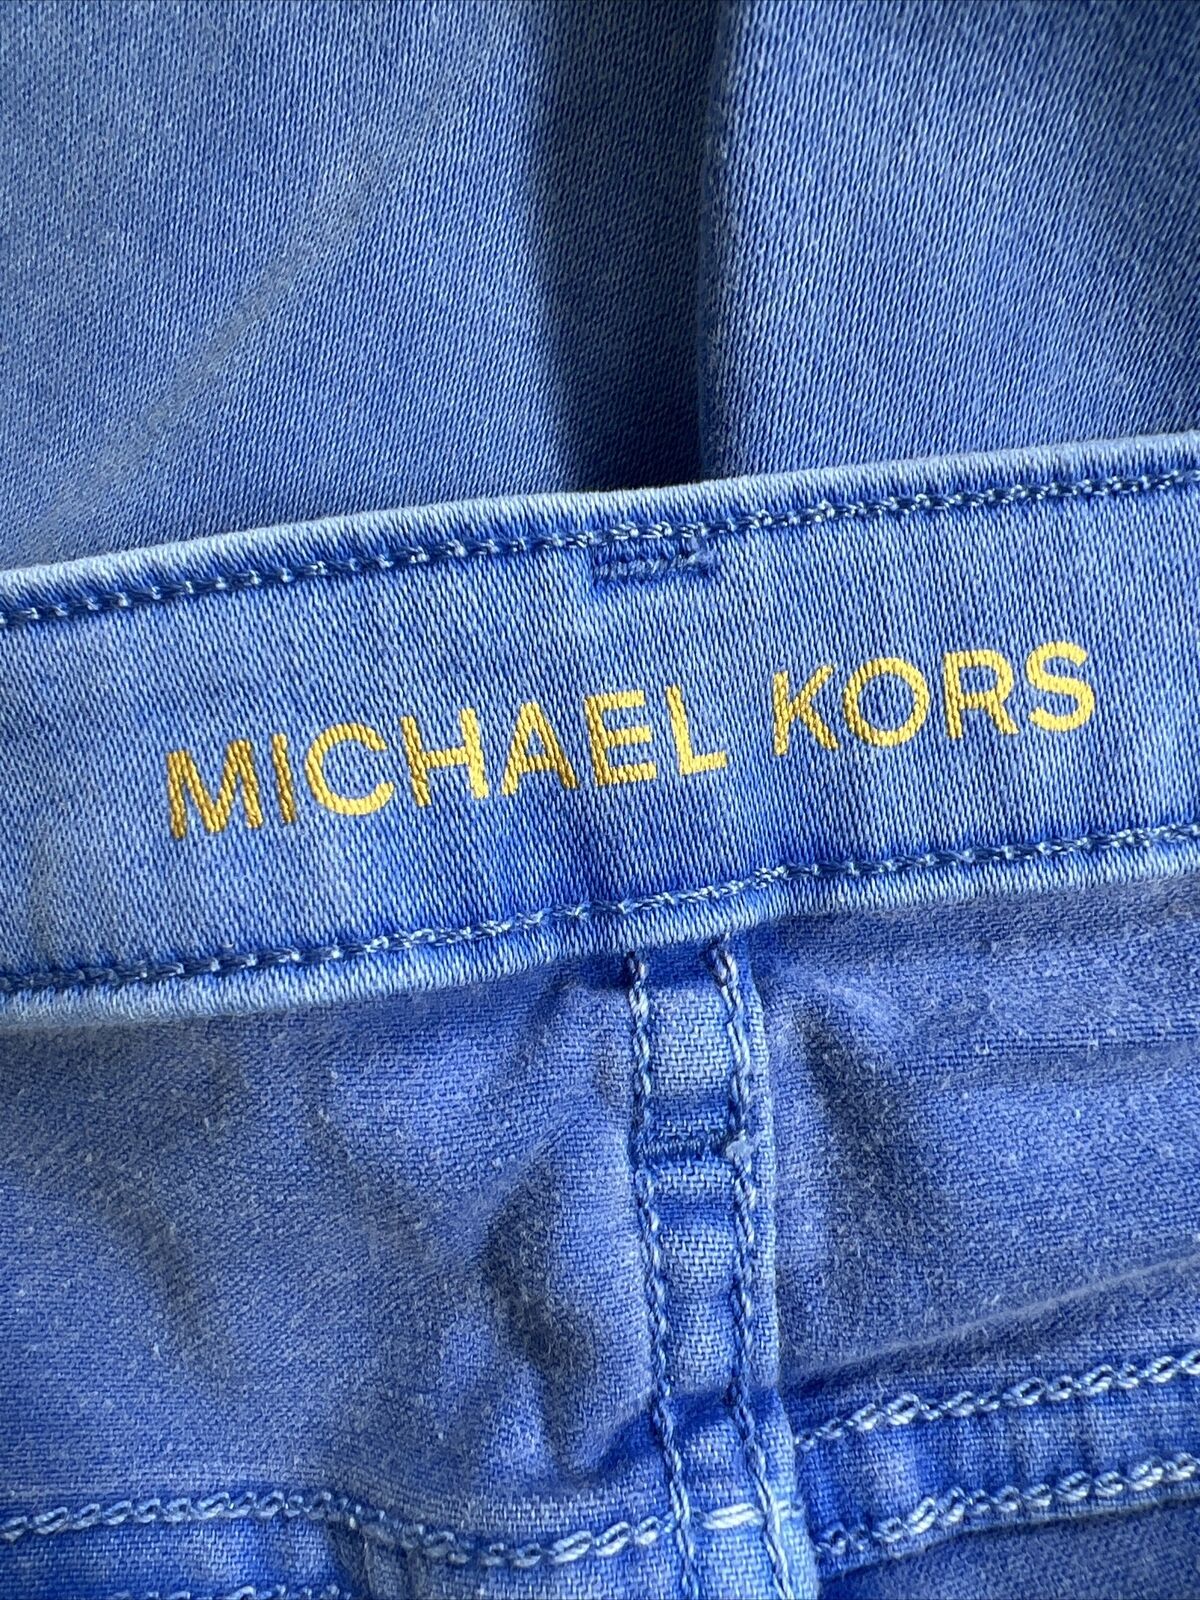 Michael Kors Women's Blue Izzy Cropped Skinny Jeans - 4